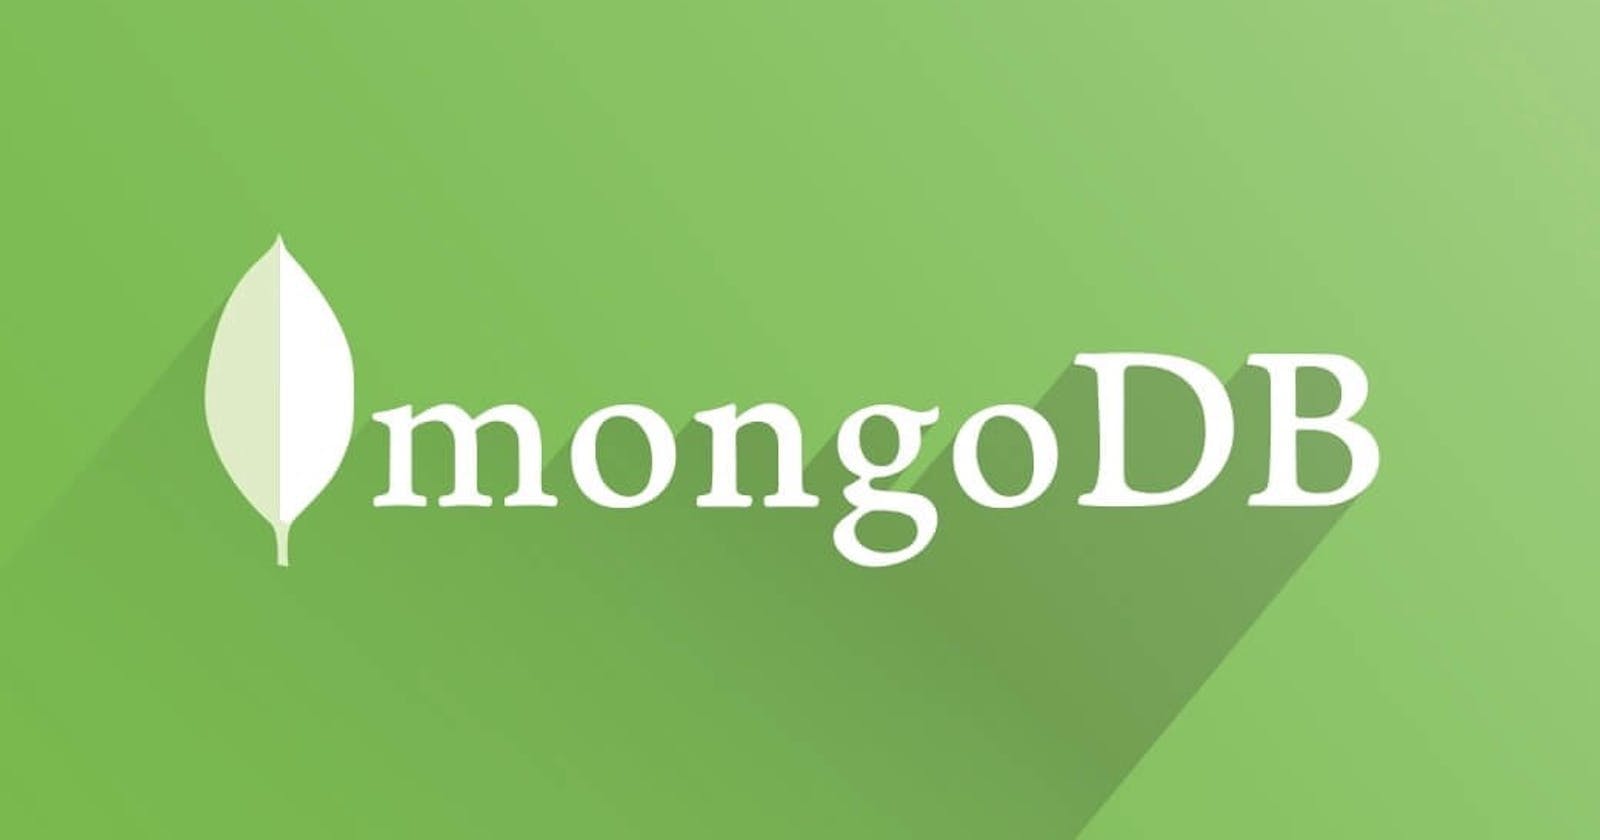 Express and MongoDB